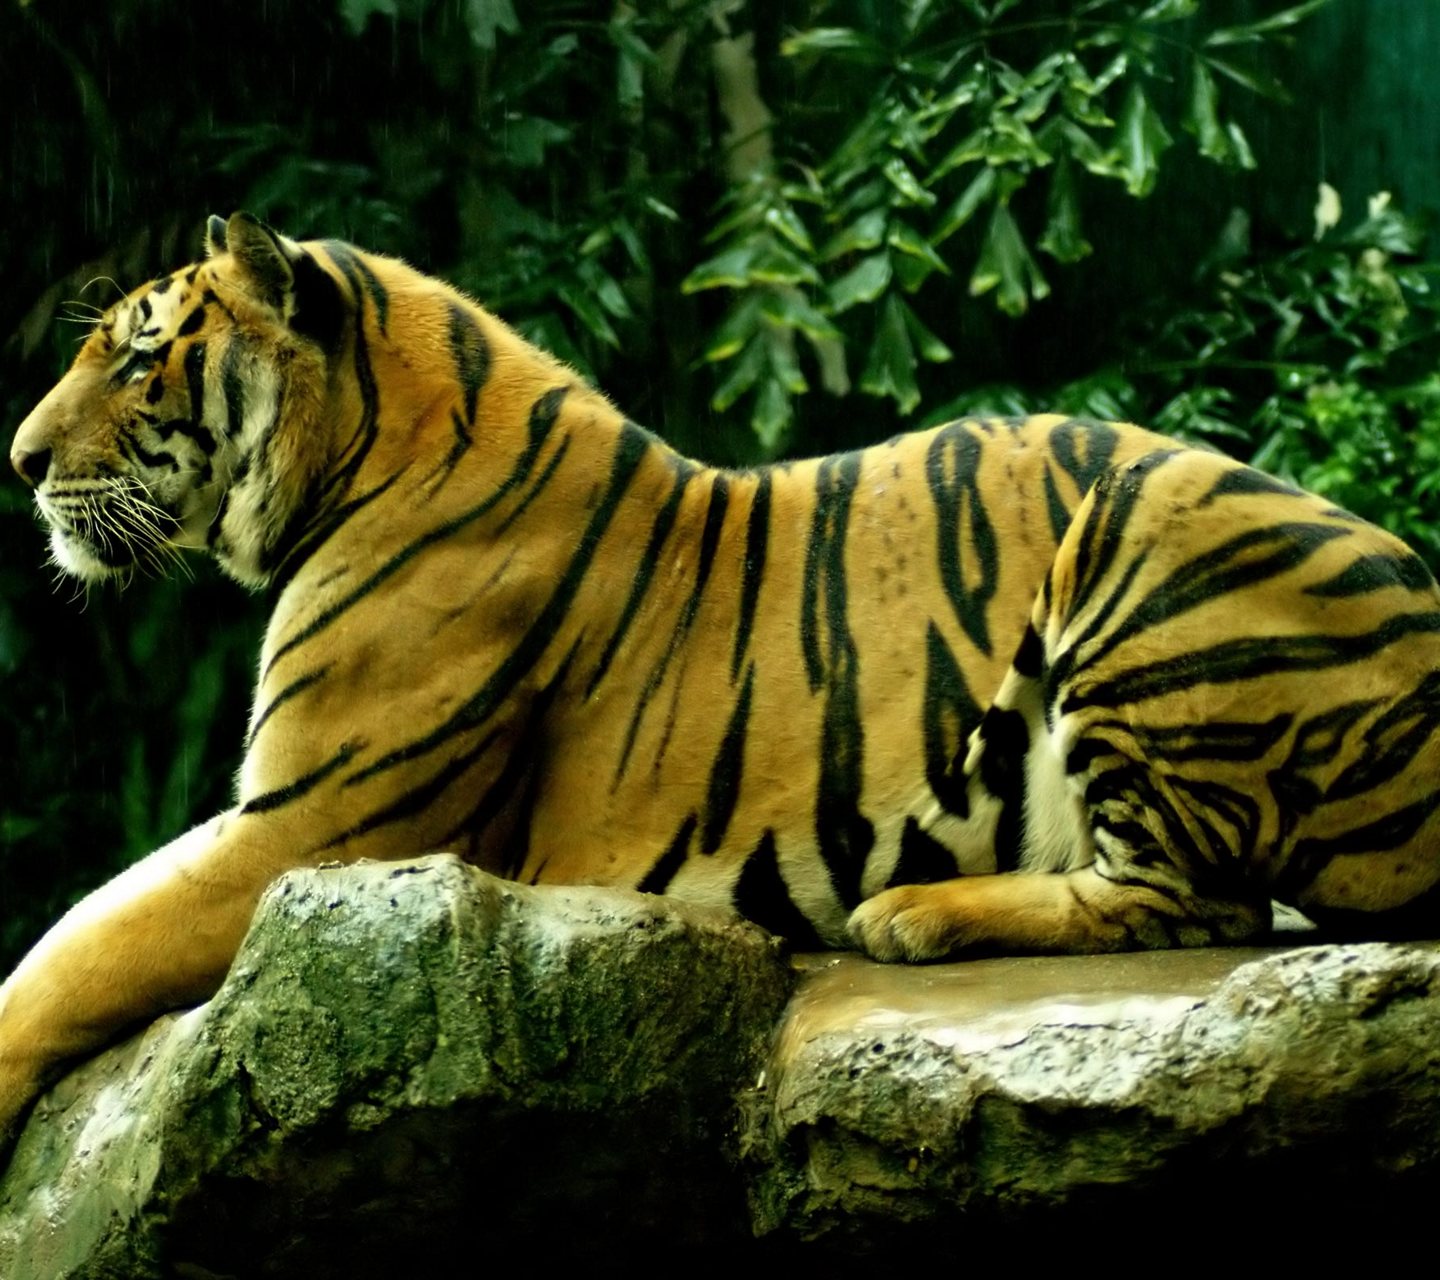 http://3.bp.blogspot.com/-EHMeYl4EvZU/UaK1VRA79kI/AAAAAAAARuE/JPTM2aui4lg/s1600/Animals-HD-Wallpaper-Royal-Bengal-tiger1.jpg